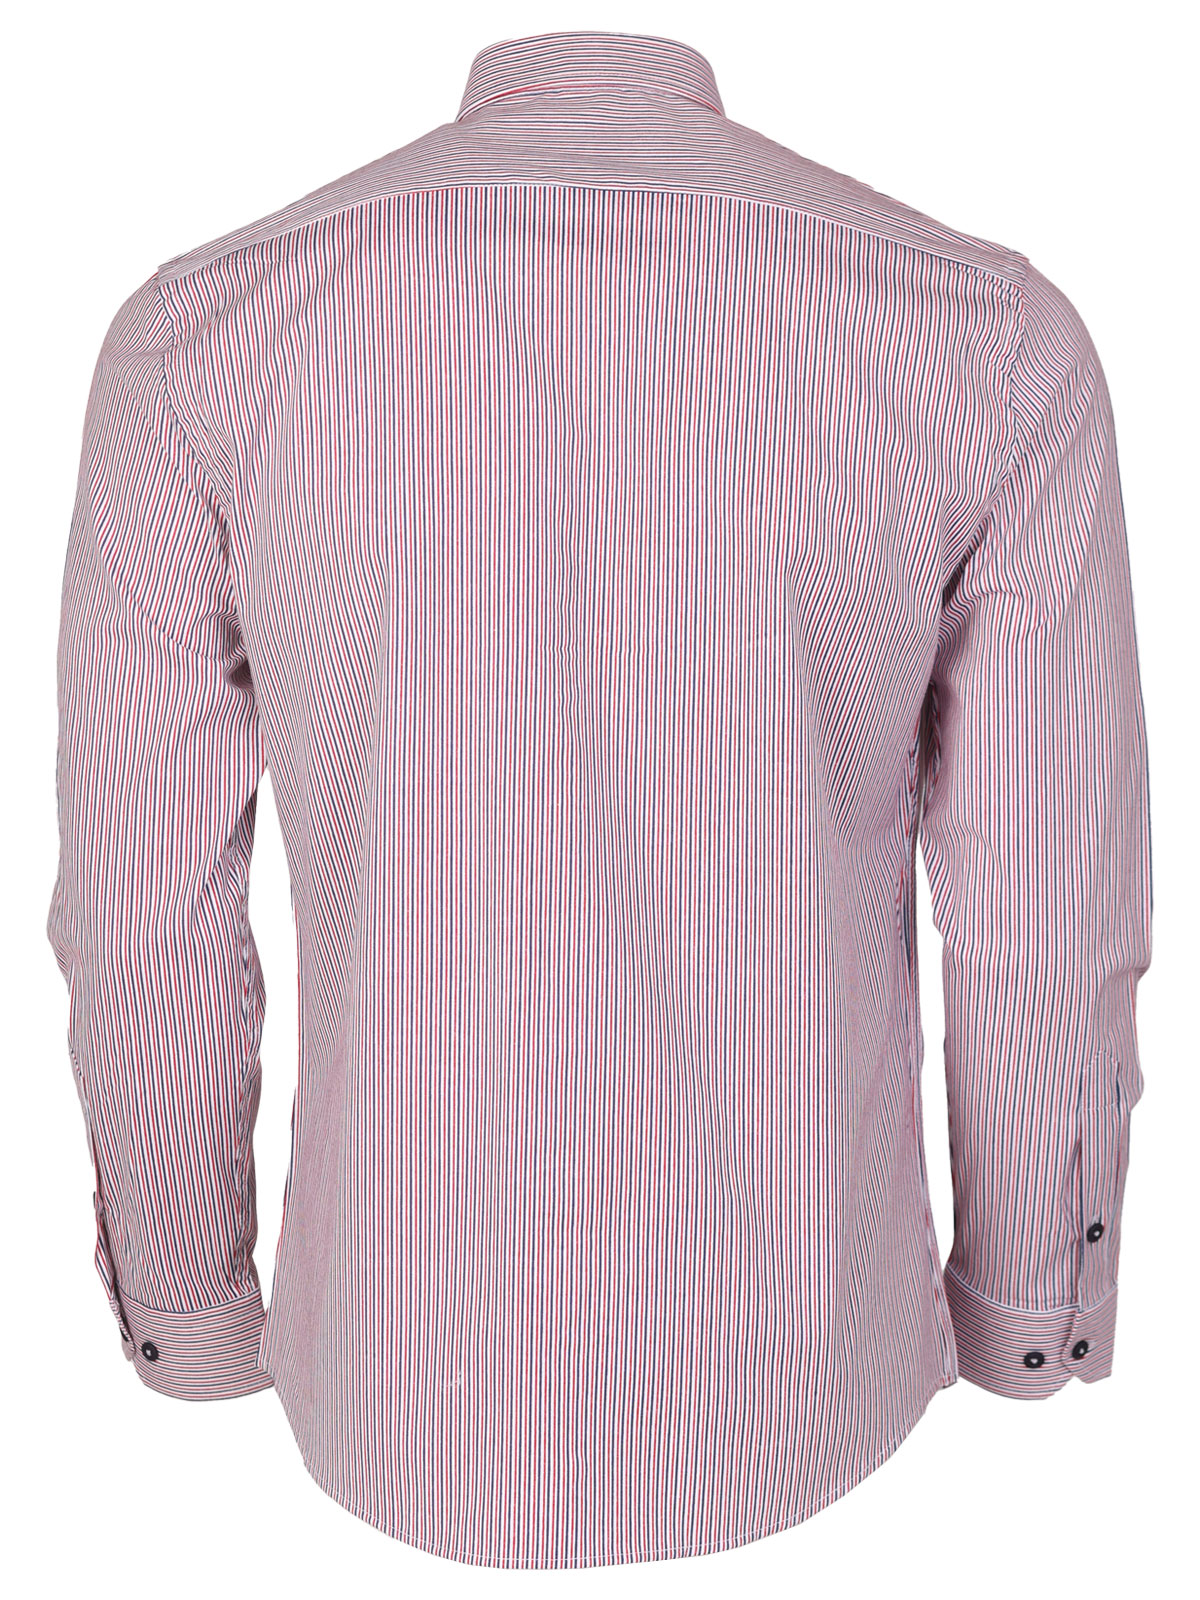 Shirt multicolored fine stripe - 21608 € 44.43 img2